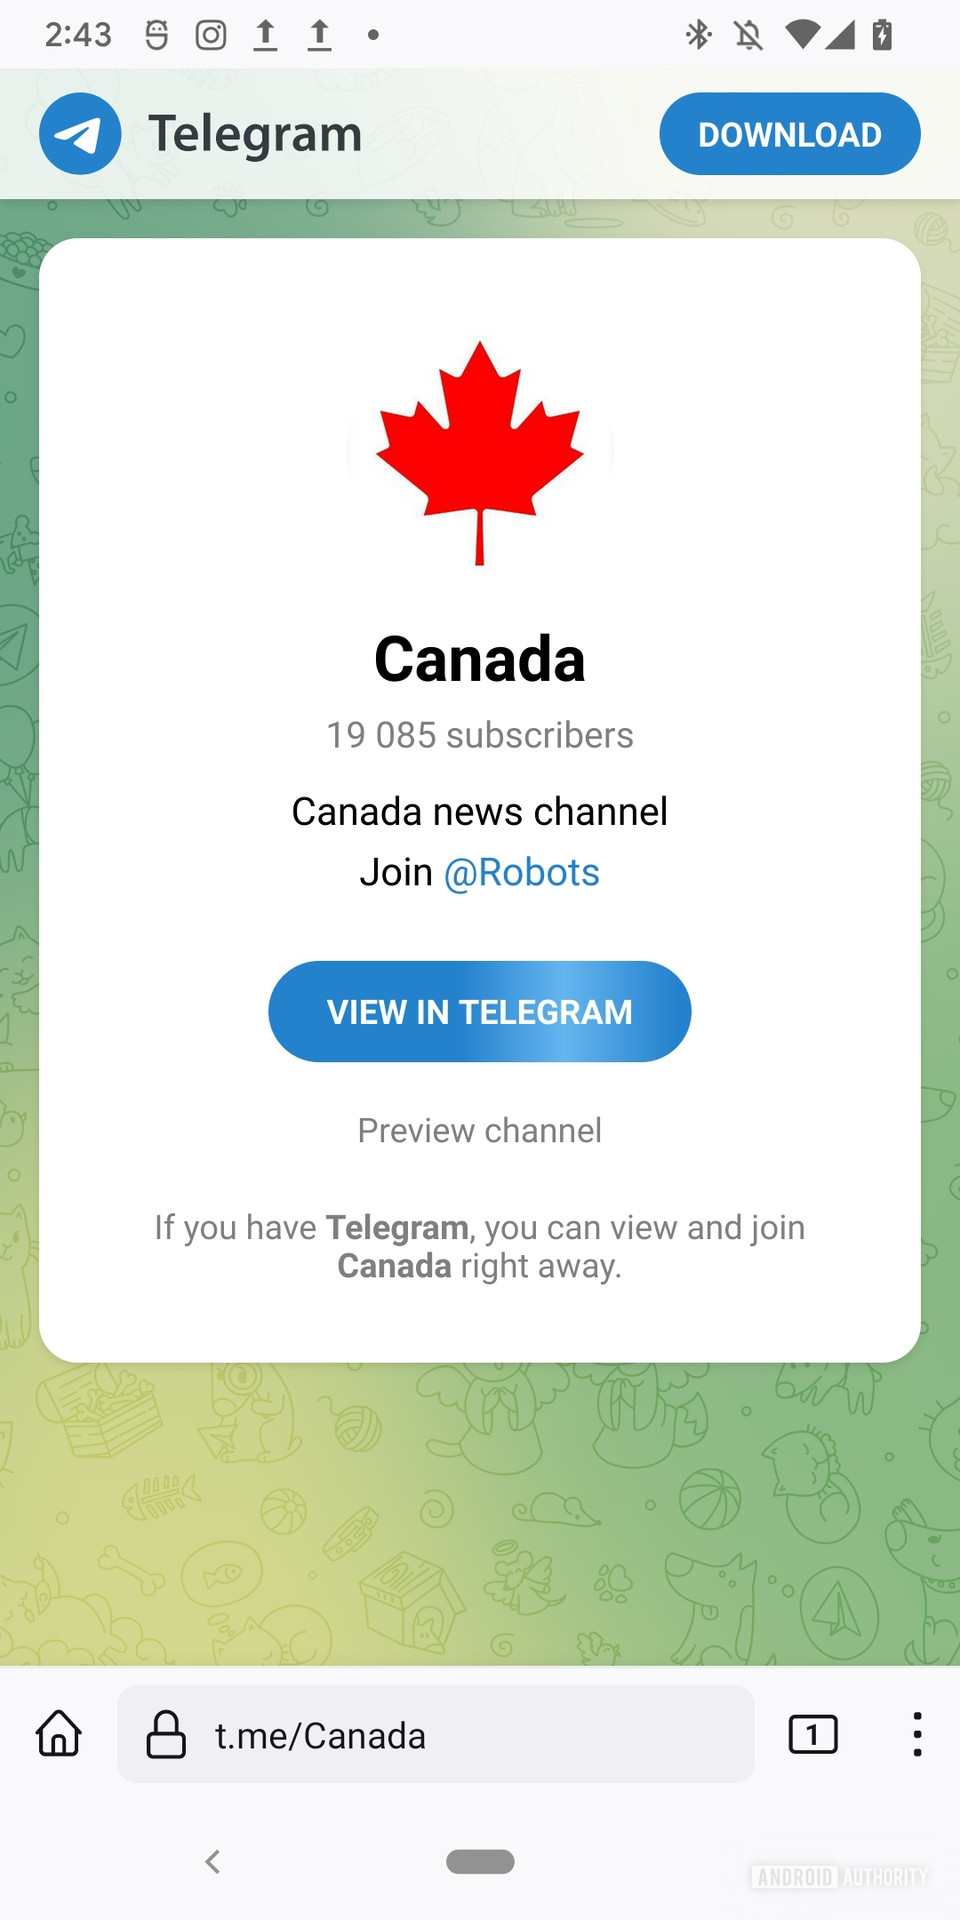 “ https://t.me/canada”的网页显示了“加拿大”的组名称及其徽标的徽标，该组的徽标是一组红色的加拿大枫叶和蓝色按钮，读取“电信中的视图”。